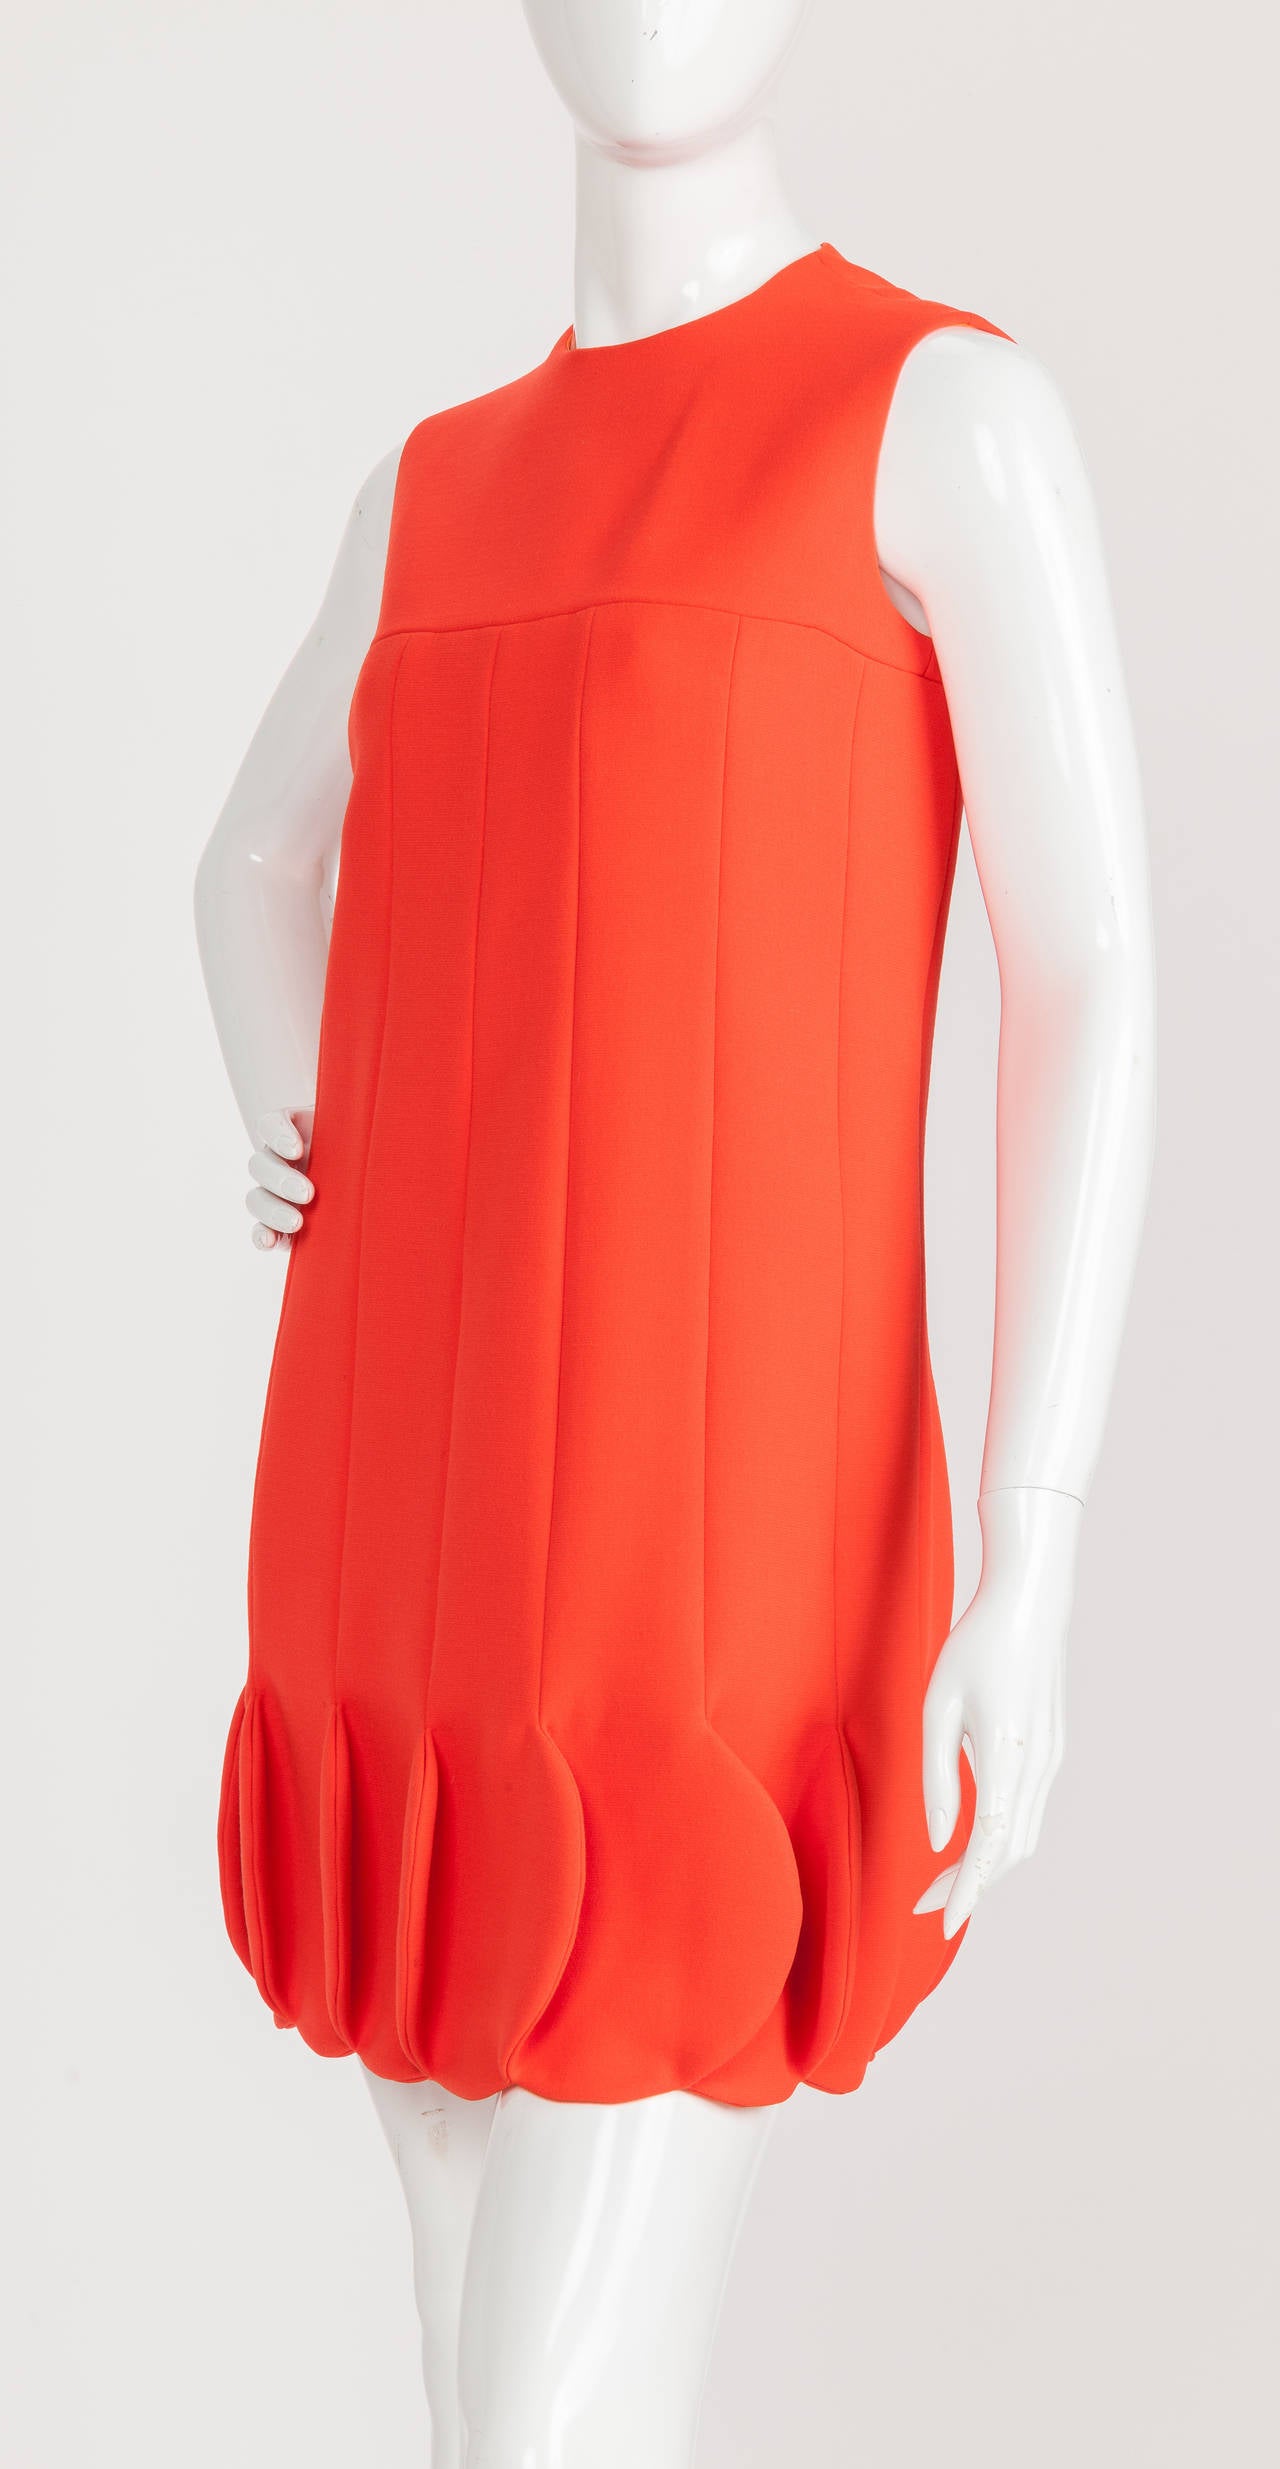 Red Iconic Pierre Cardin Orange Space Age Dress w/Petalled Hem ca. 1968